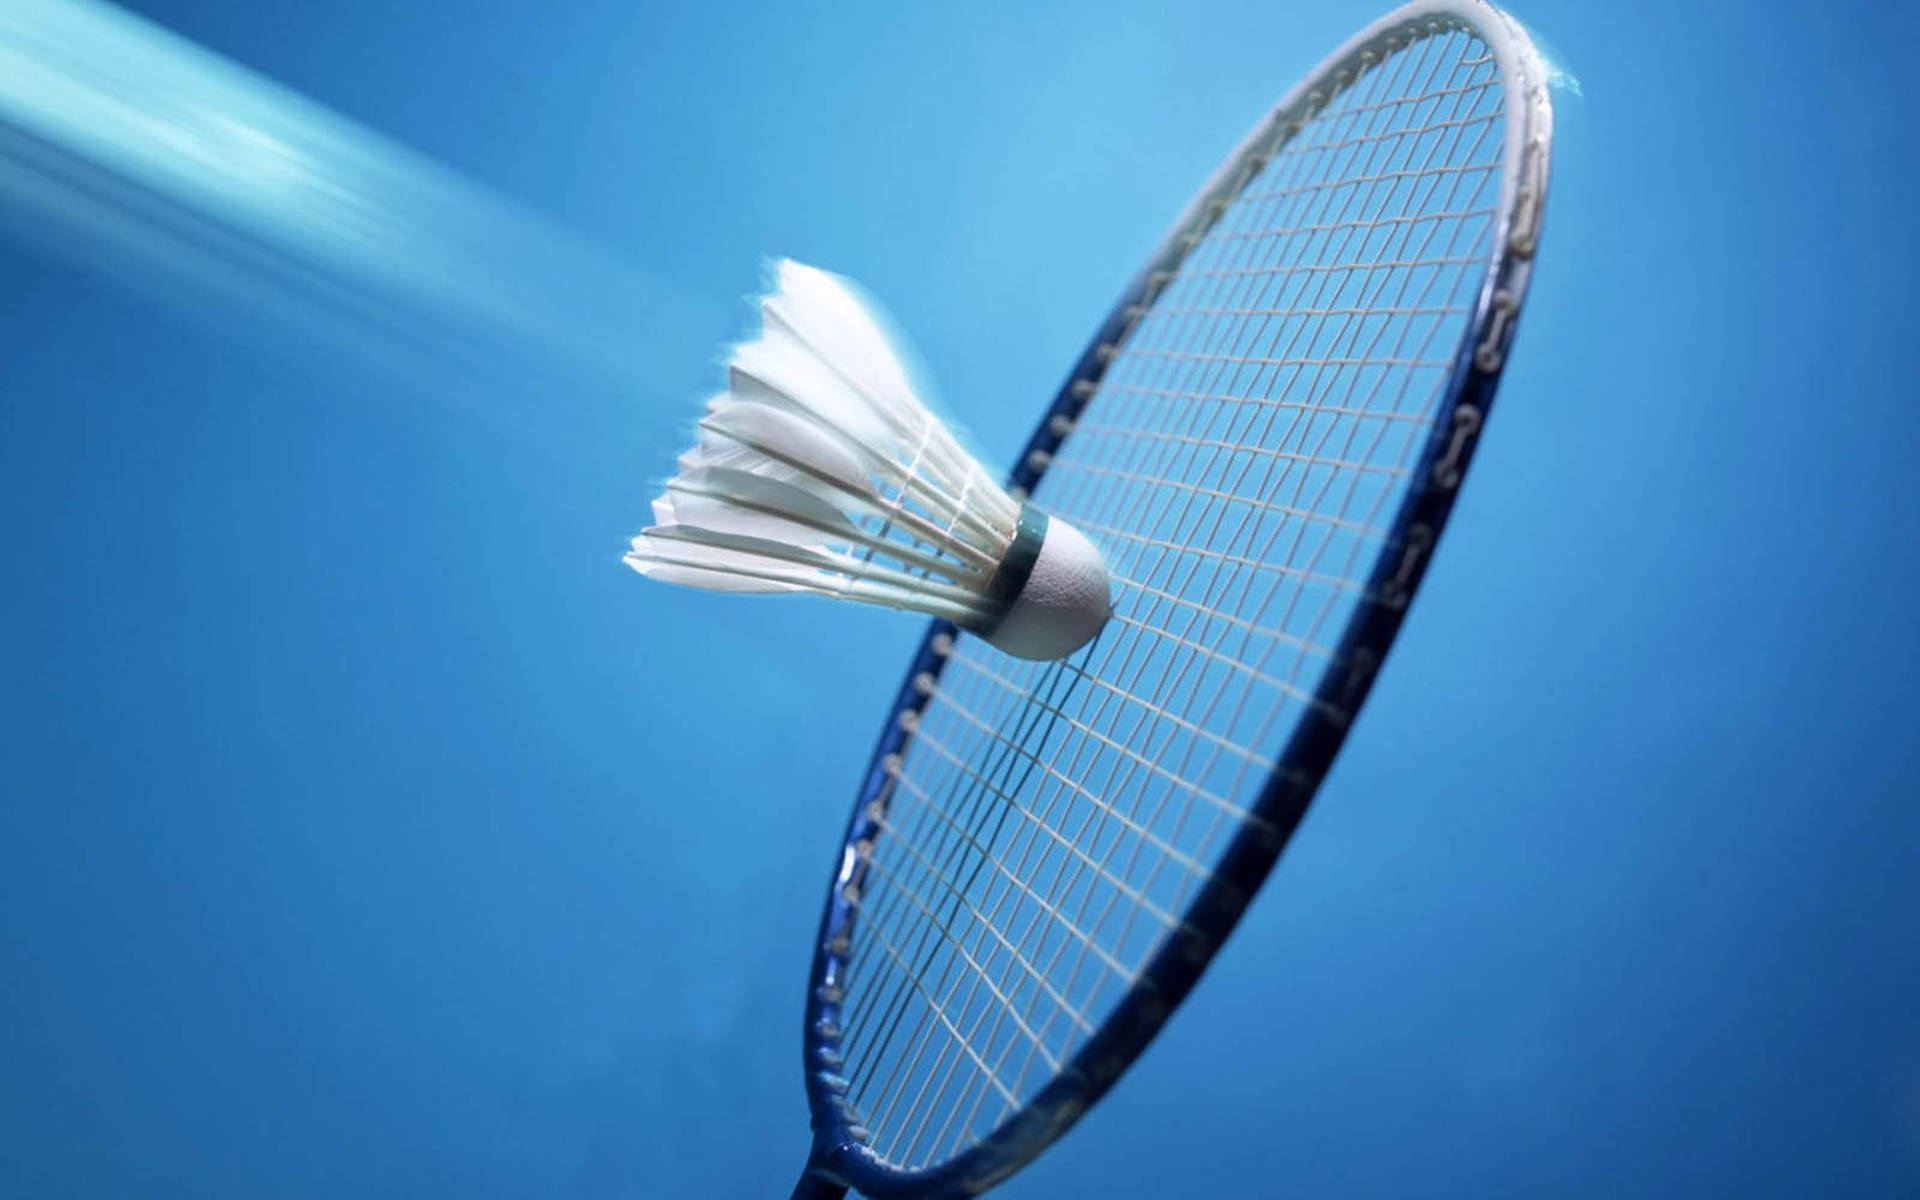 Swift Motion - A Badminton Shuttlecock in Action Wallpaper